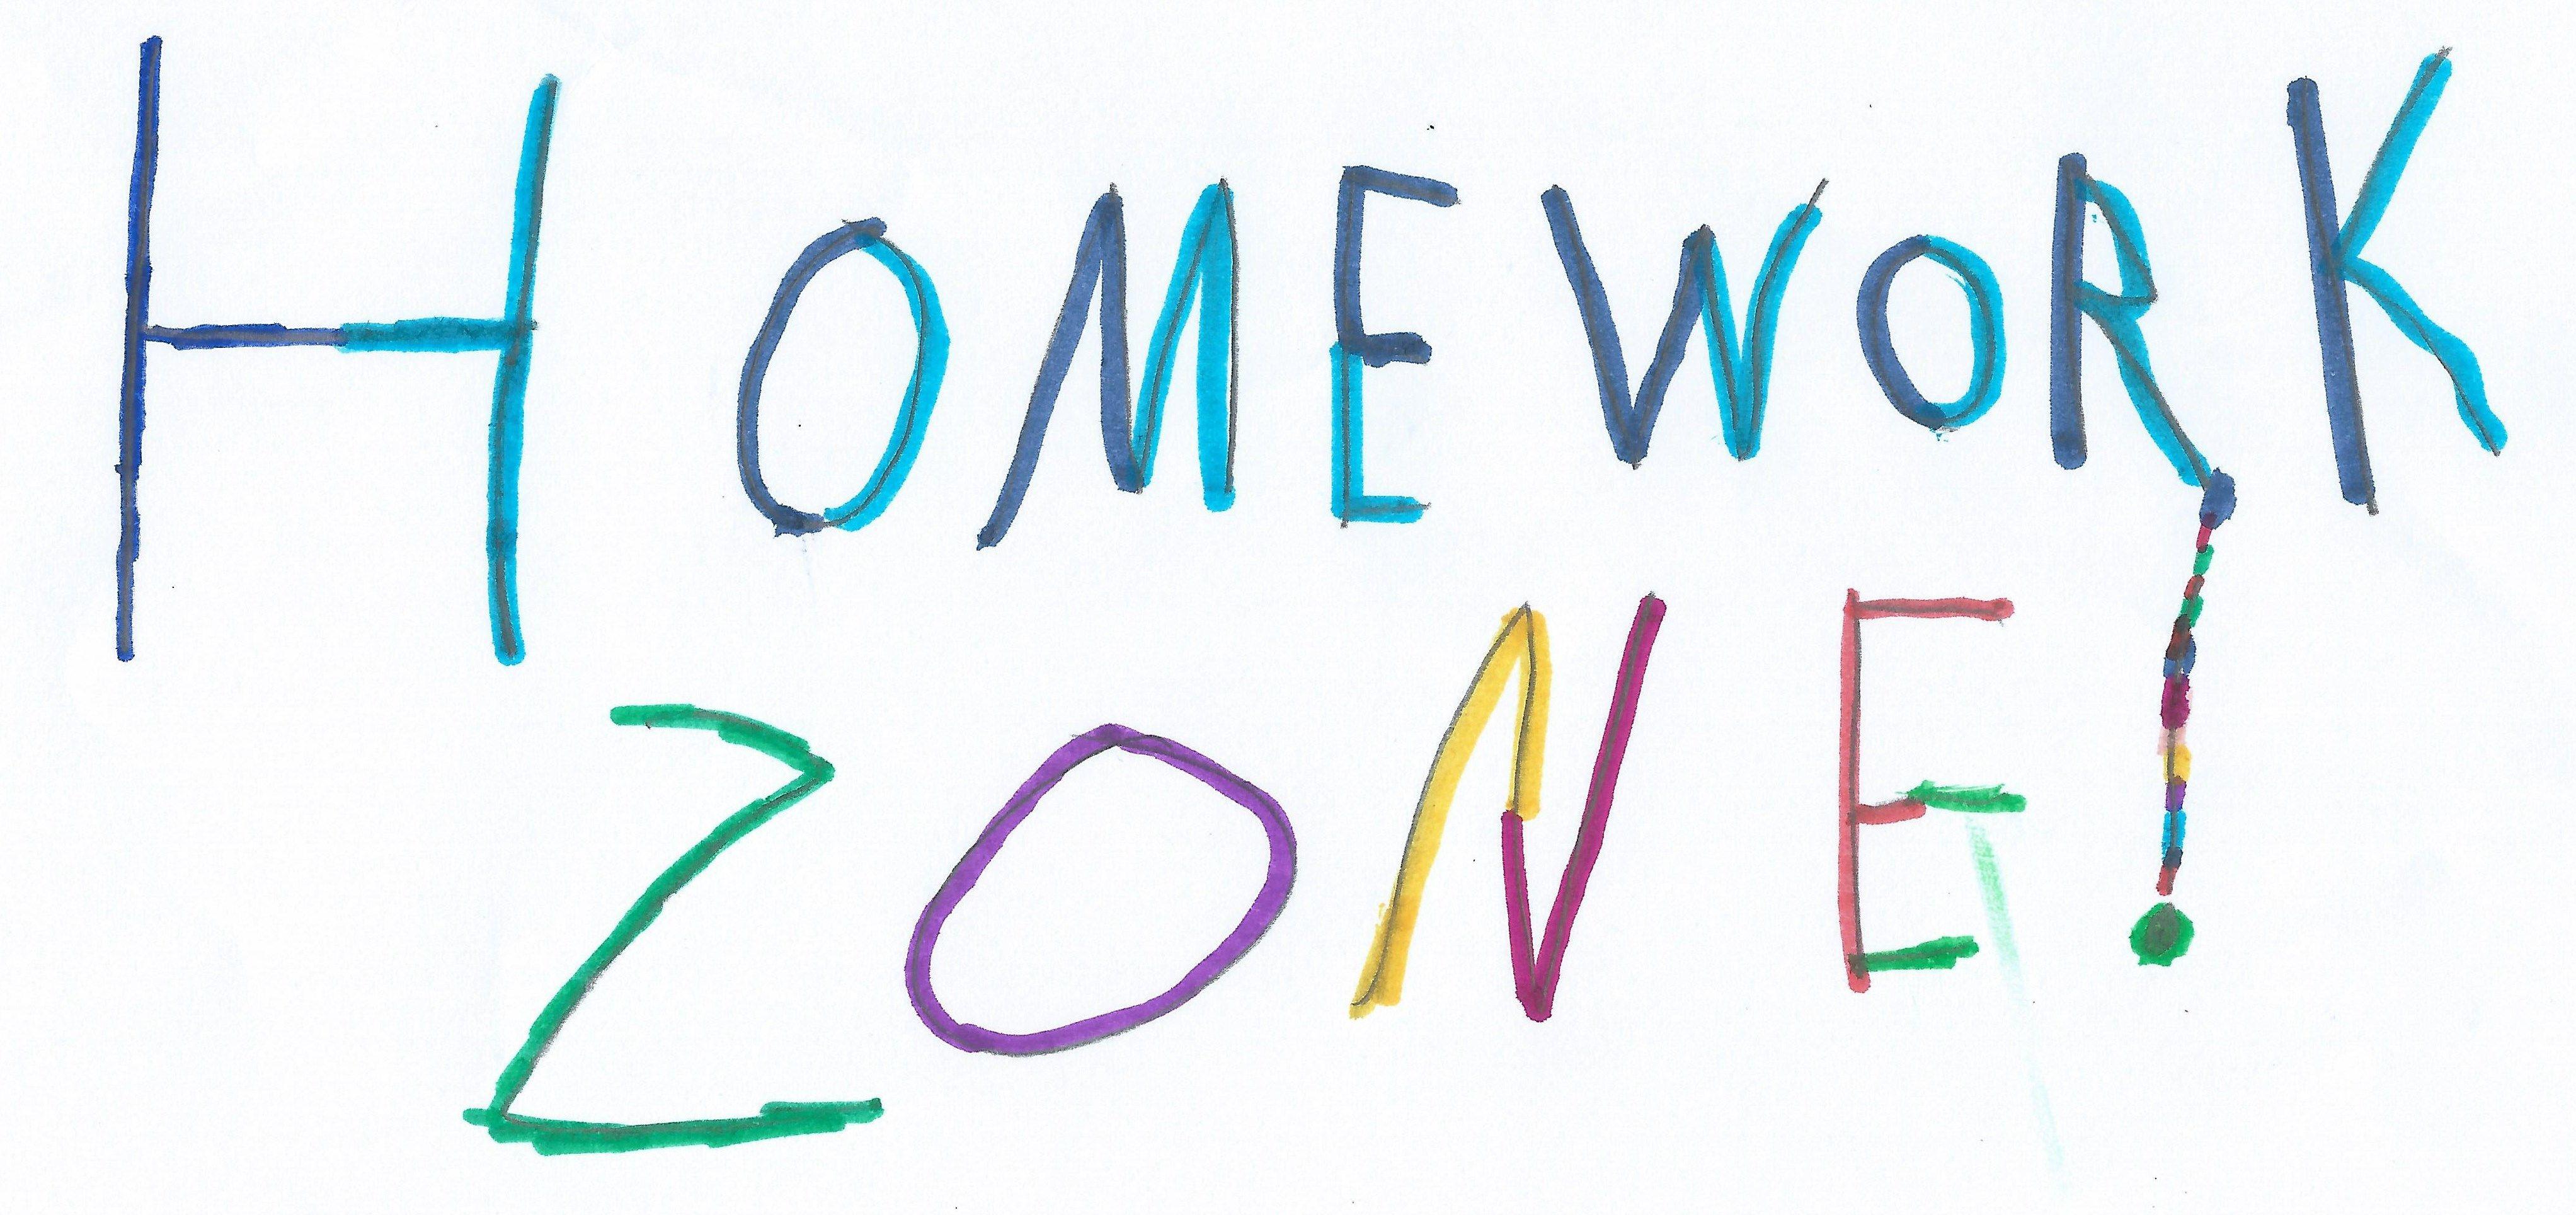 the homework logo